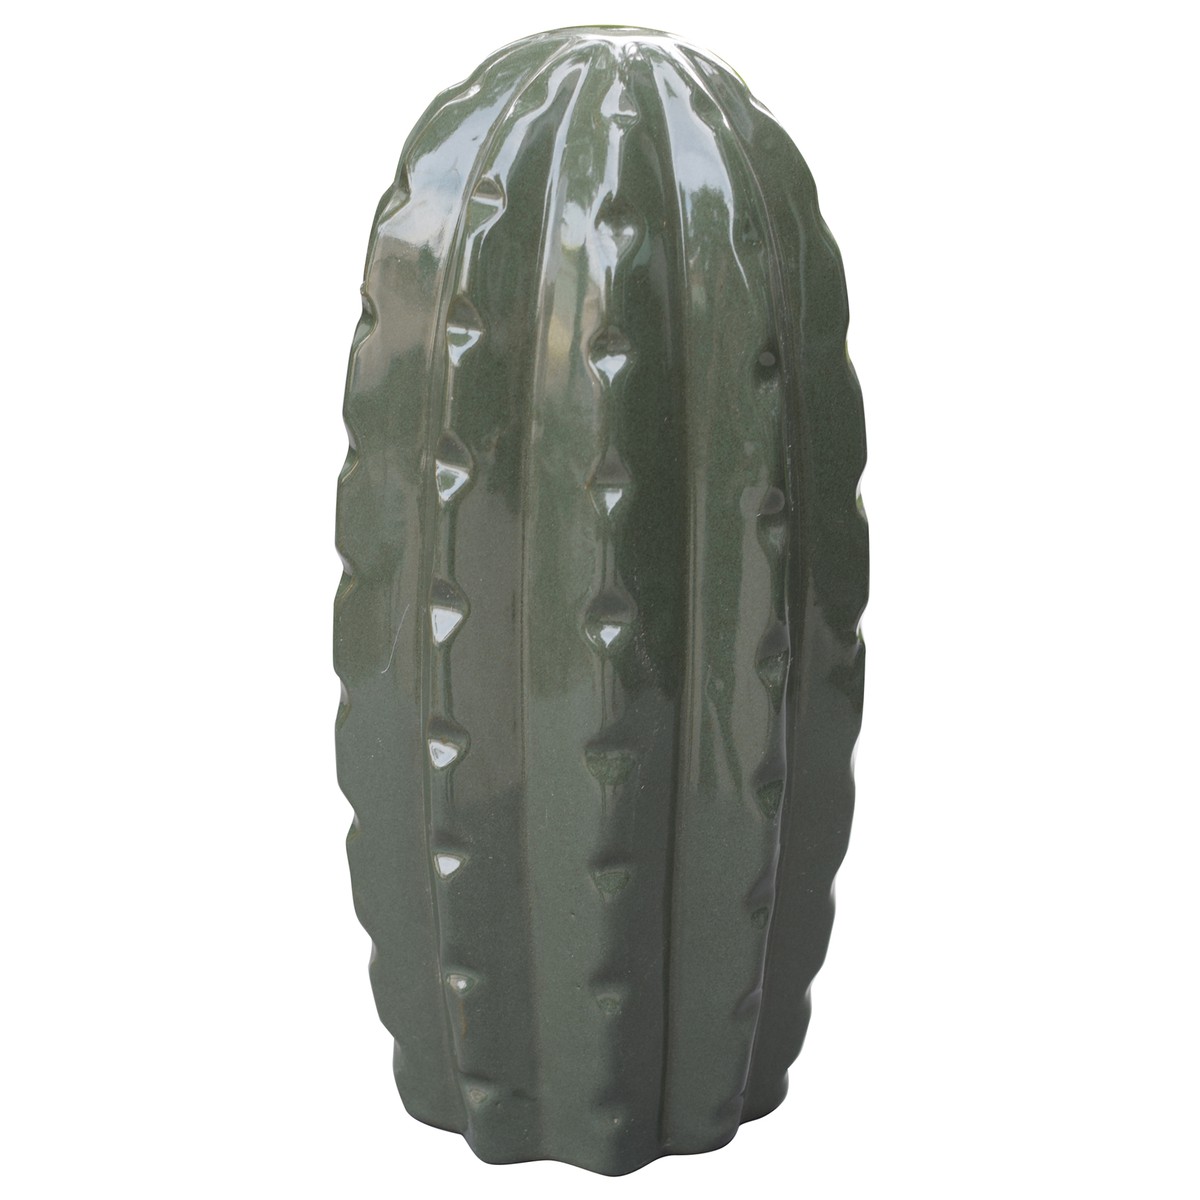   Deco cactus h30 vert olive Vert olive 14.5x30cm